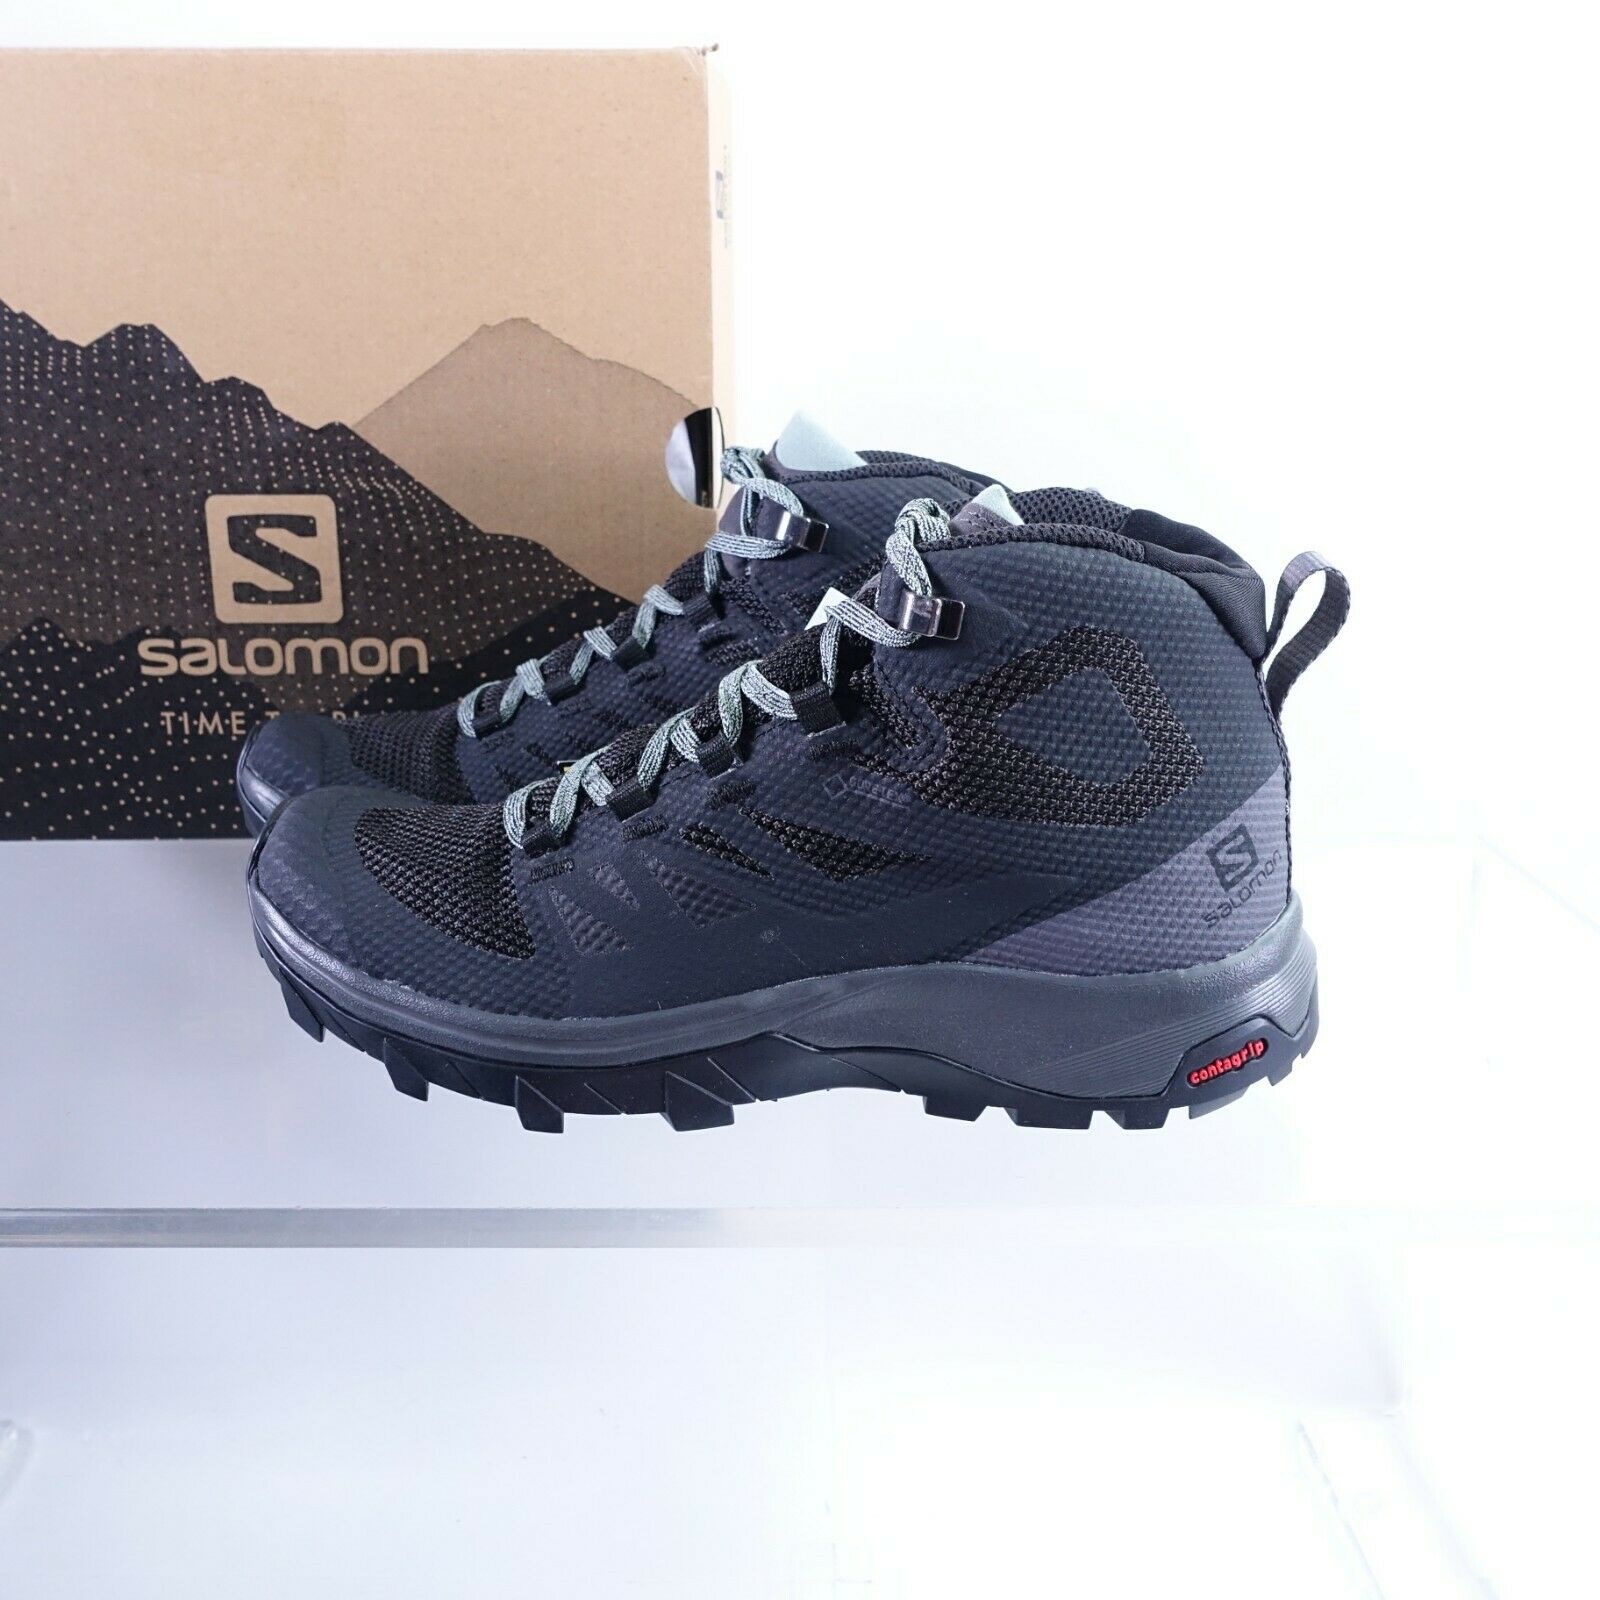 Size 5.5 Women's Salomon OUTLine Mid GTX Waterproof Hiking Shoes 404844-21 Black